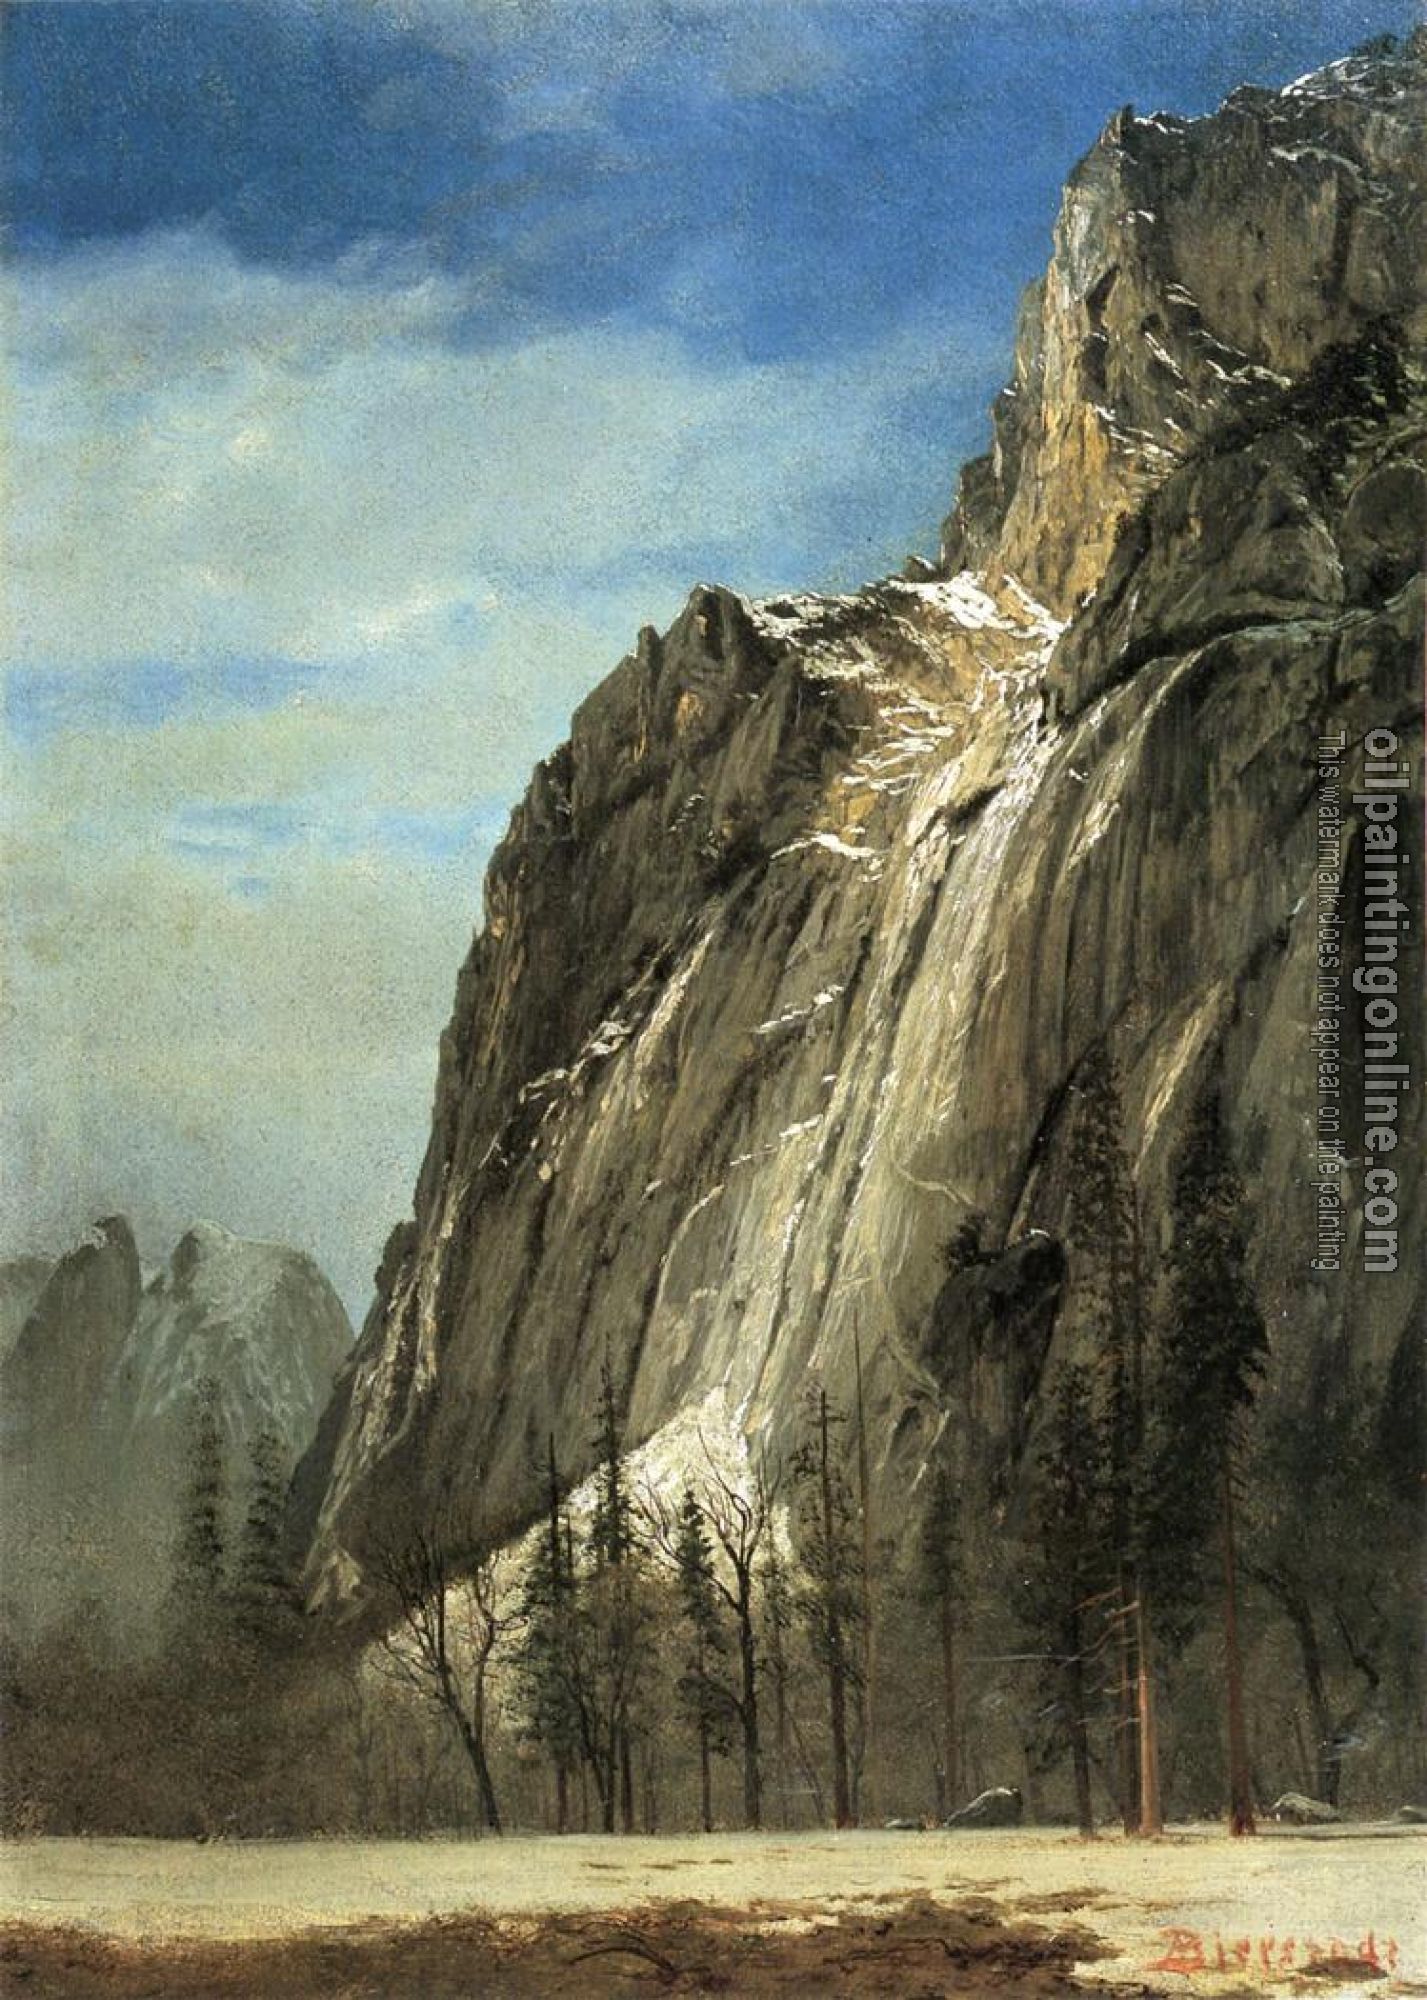 Bierstadt, Albert - Cathedral Rocks A Yosemite View